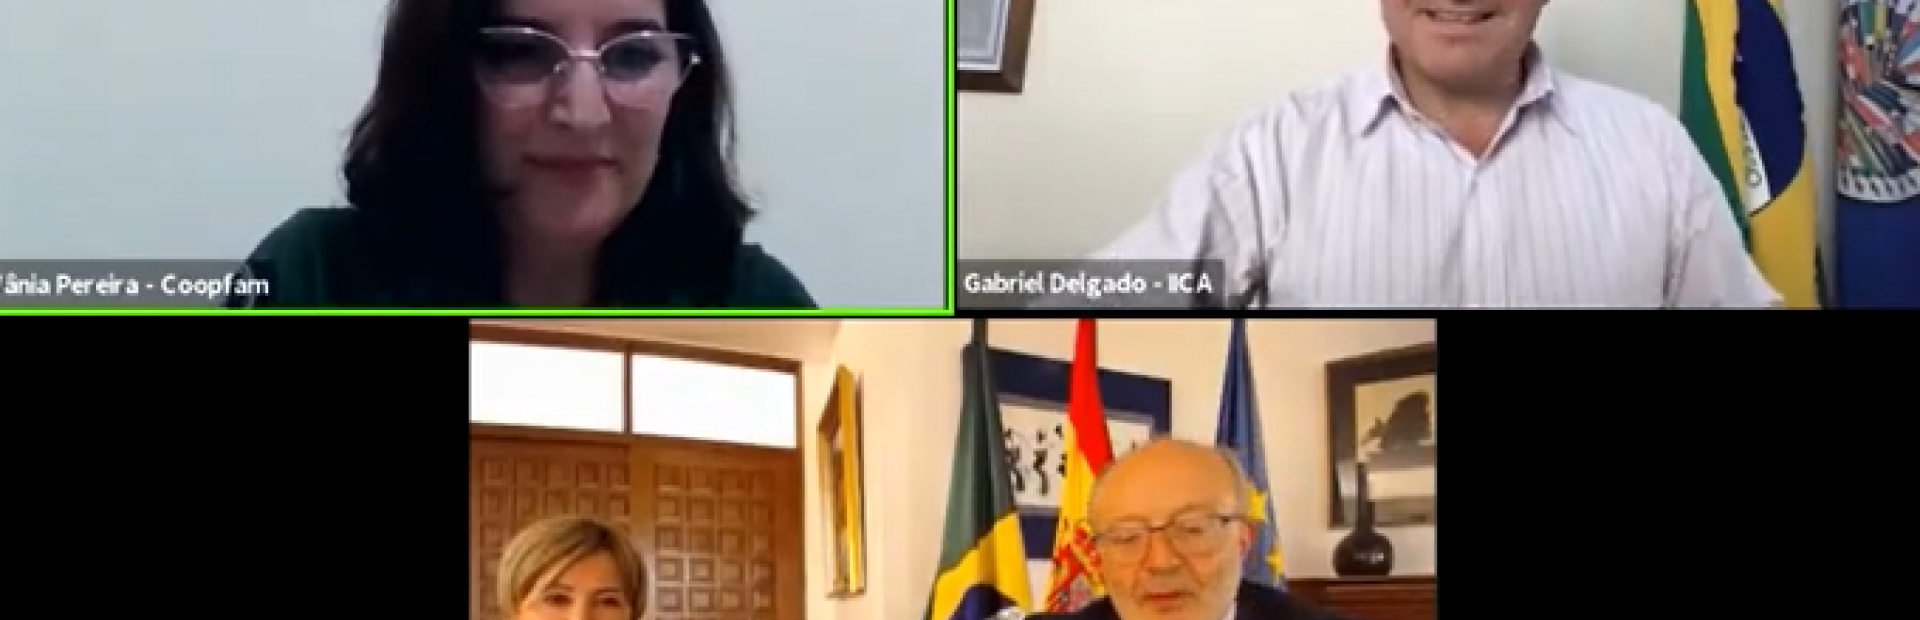 Print de tela: Vânia Pereira da Coopfam, Gabirel Delgado do IICA, conselheira Elisa Barahona Nieto  e embaixador Fernando Garcia Casas da Embaixada da Espanha